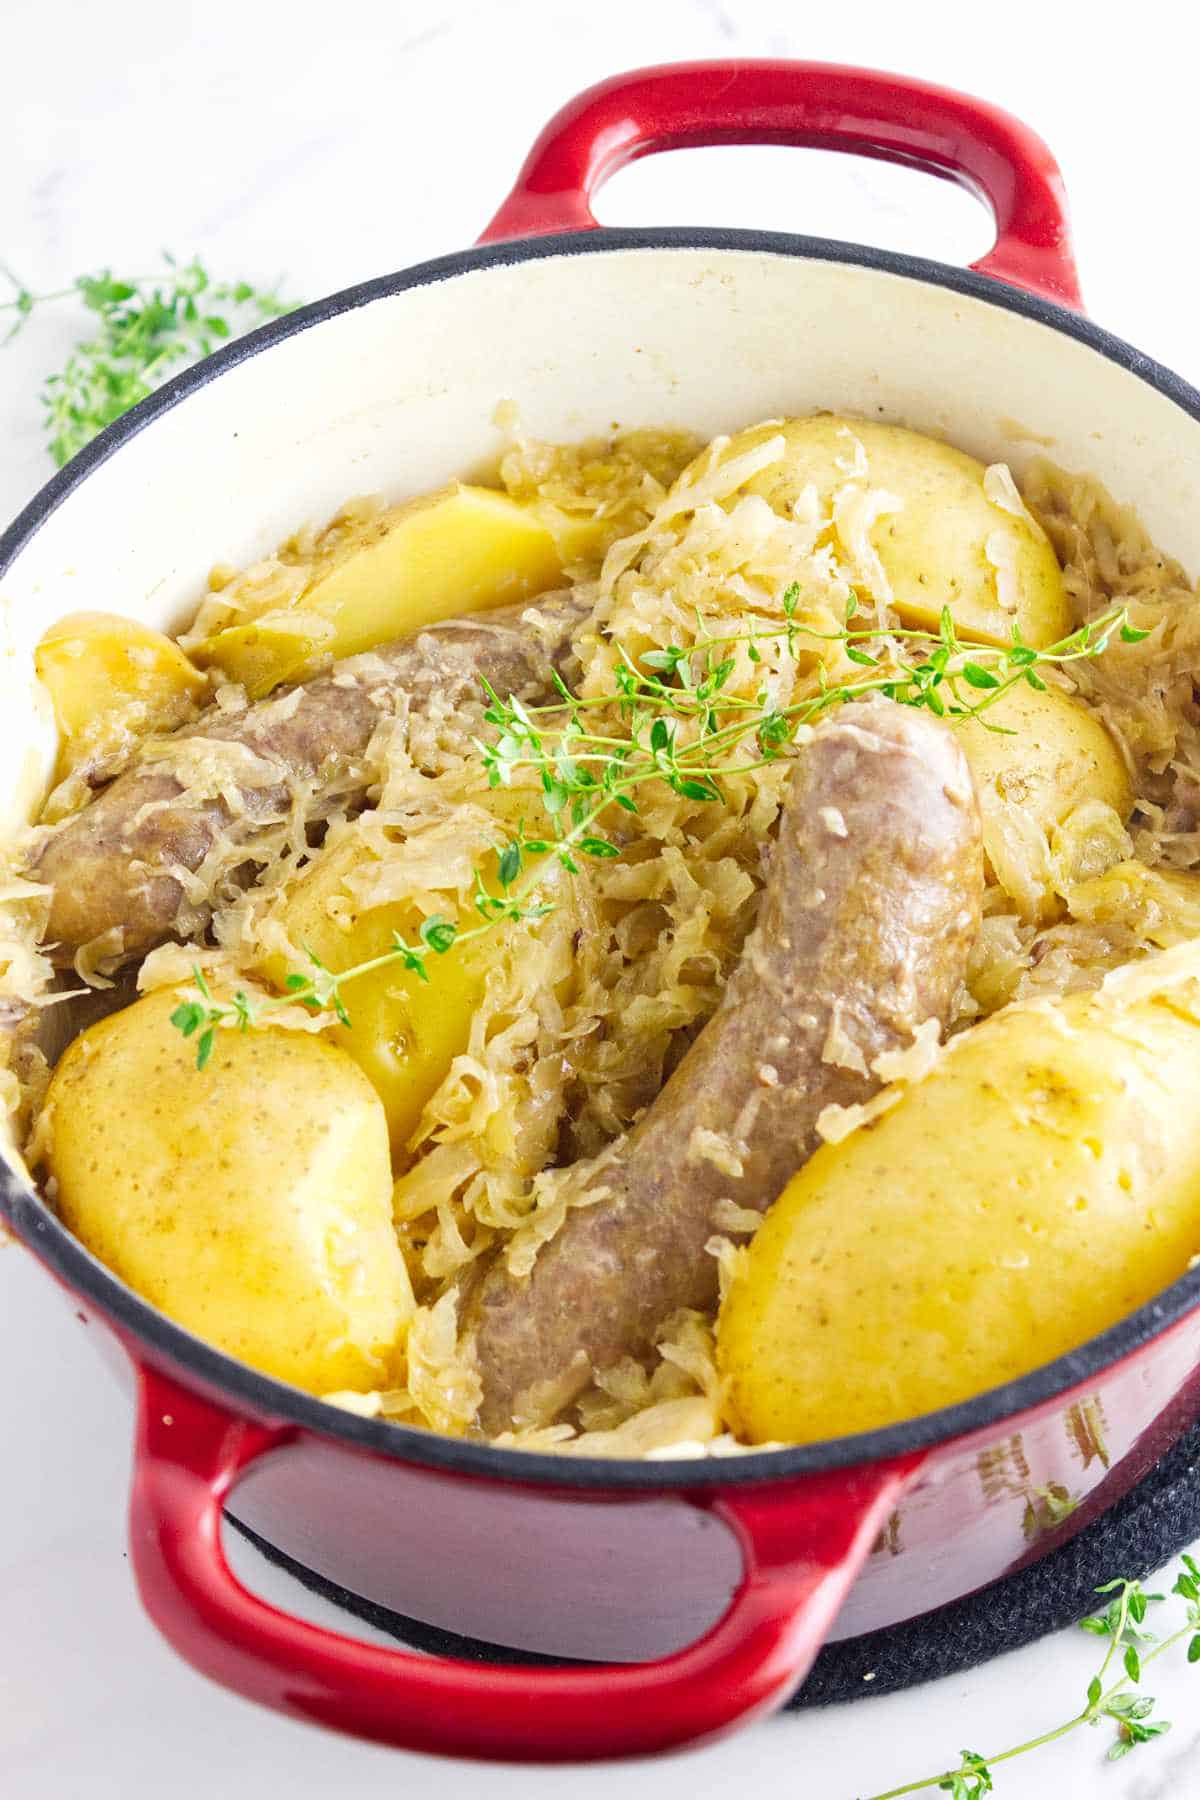 German bratwurst, potatoes, and sauerkraut in a pot.